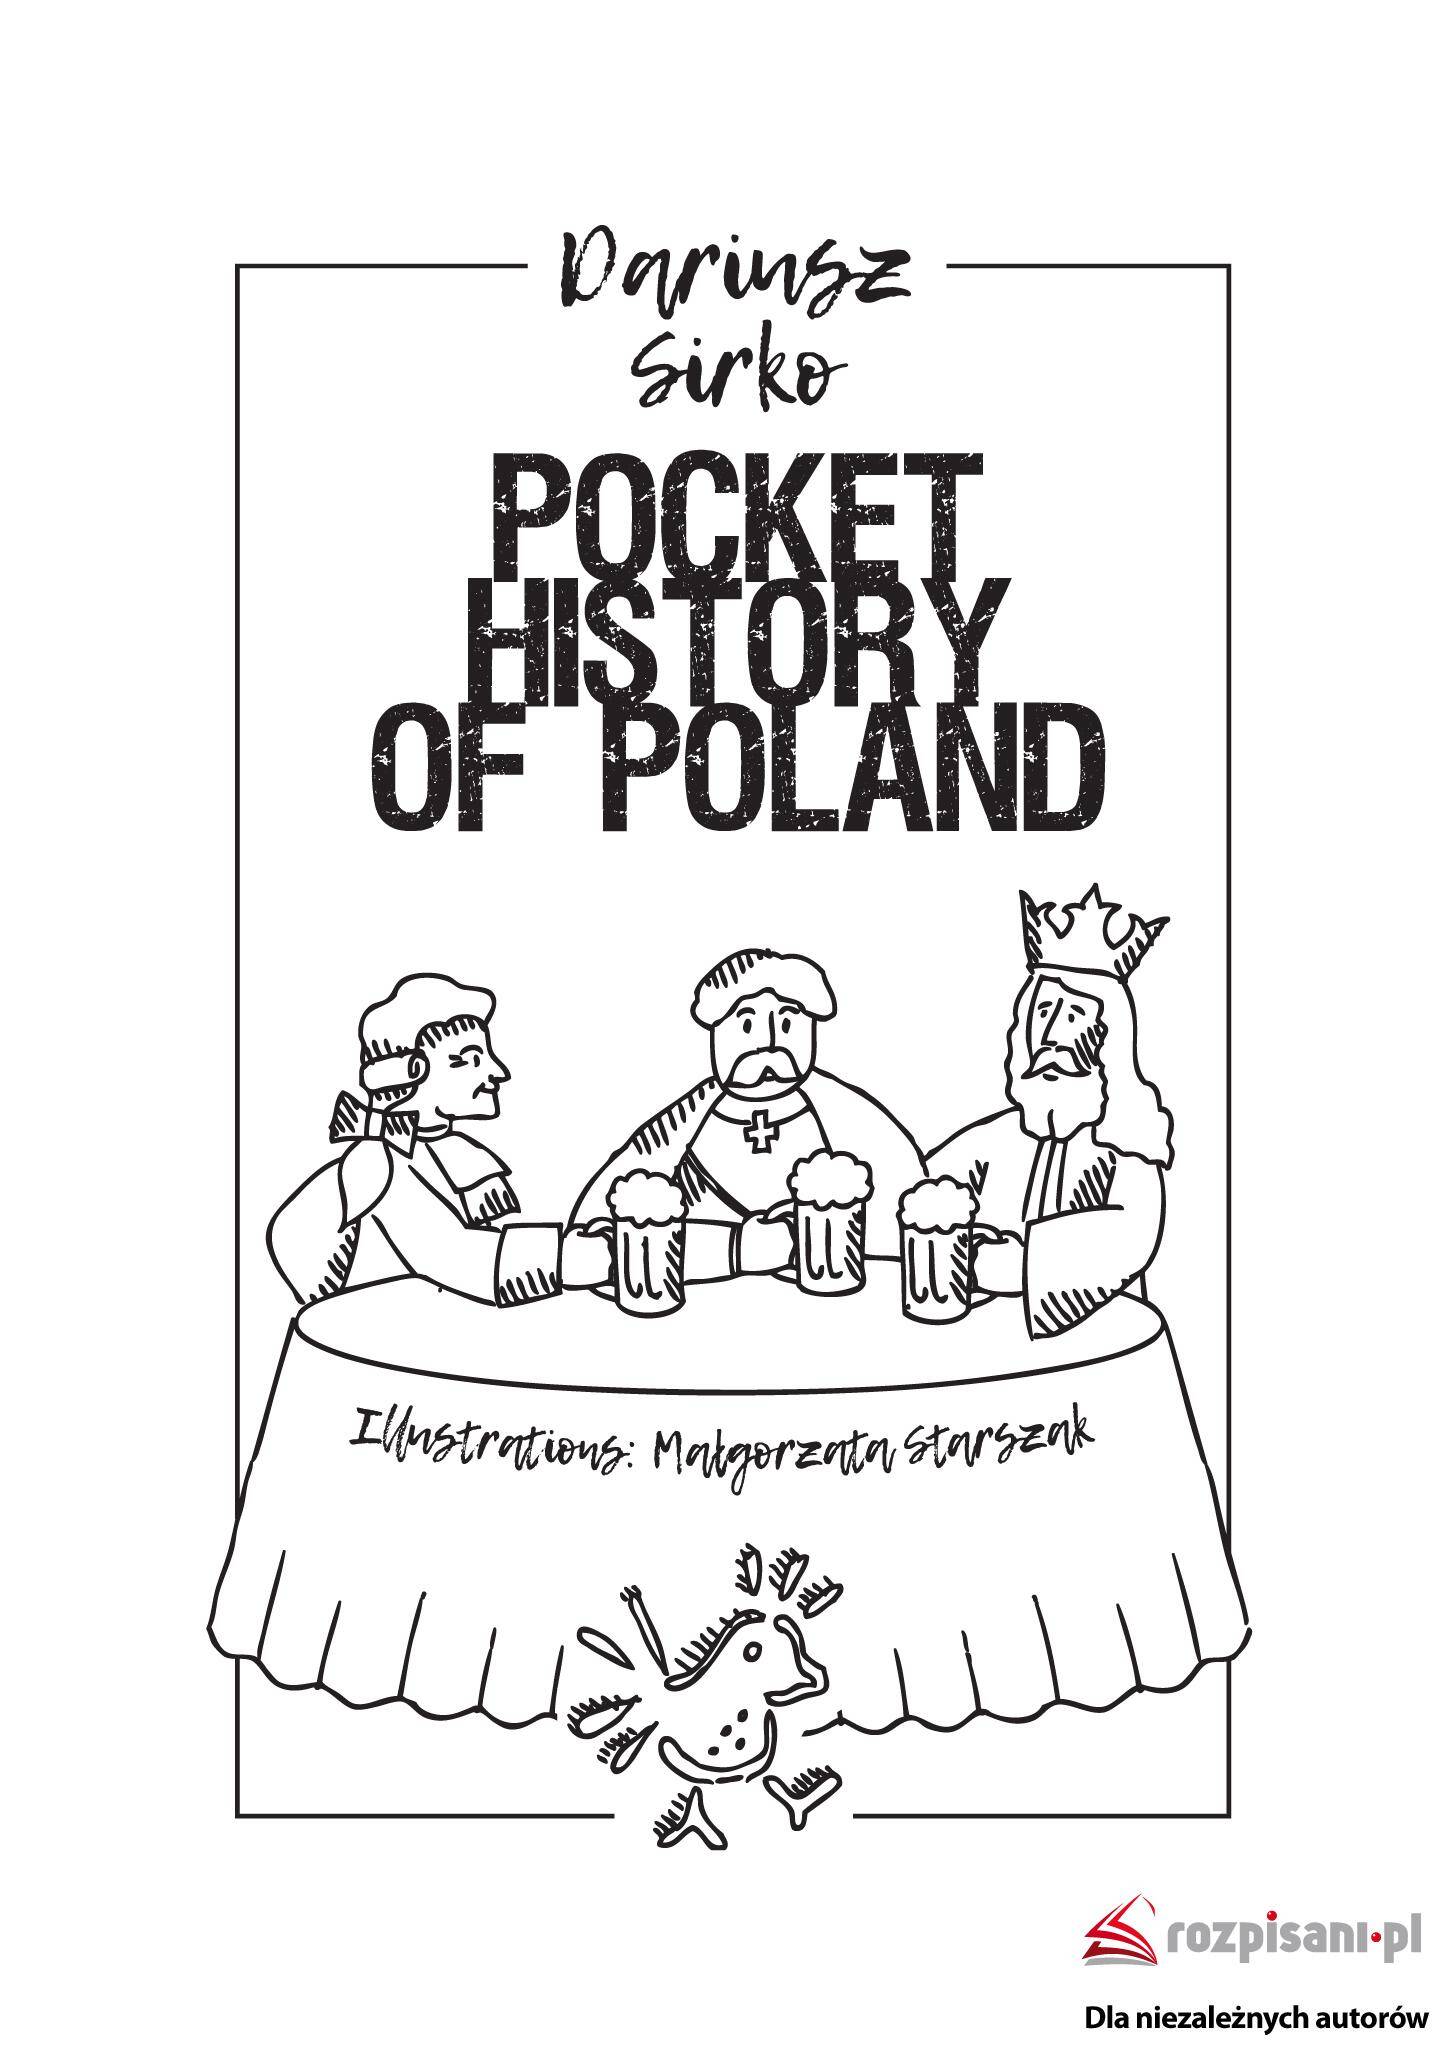 Pocket History of Poland wyd. 2